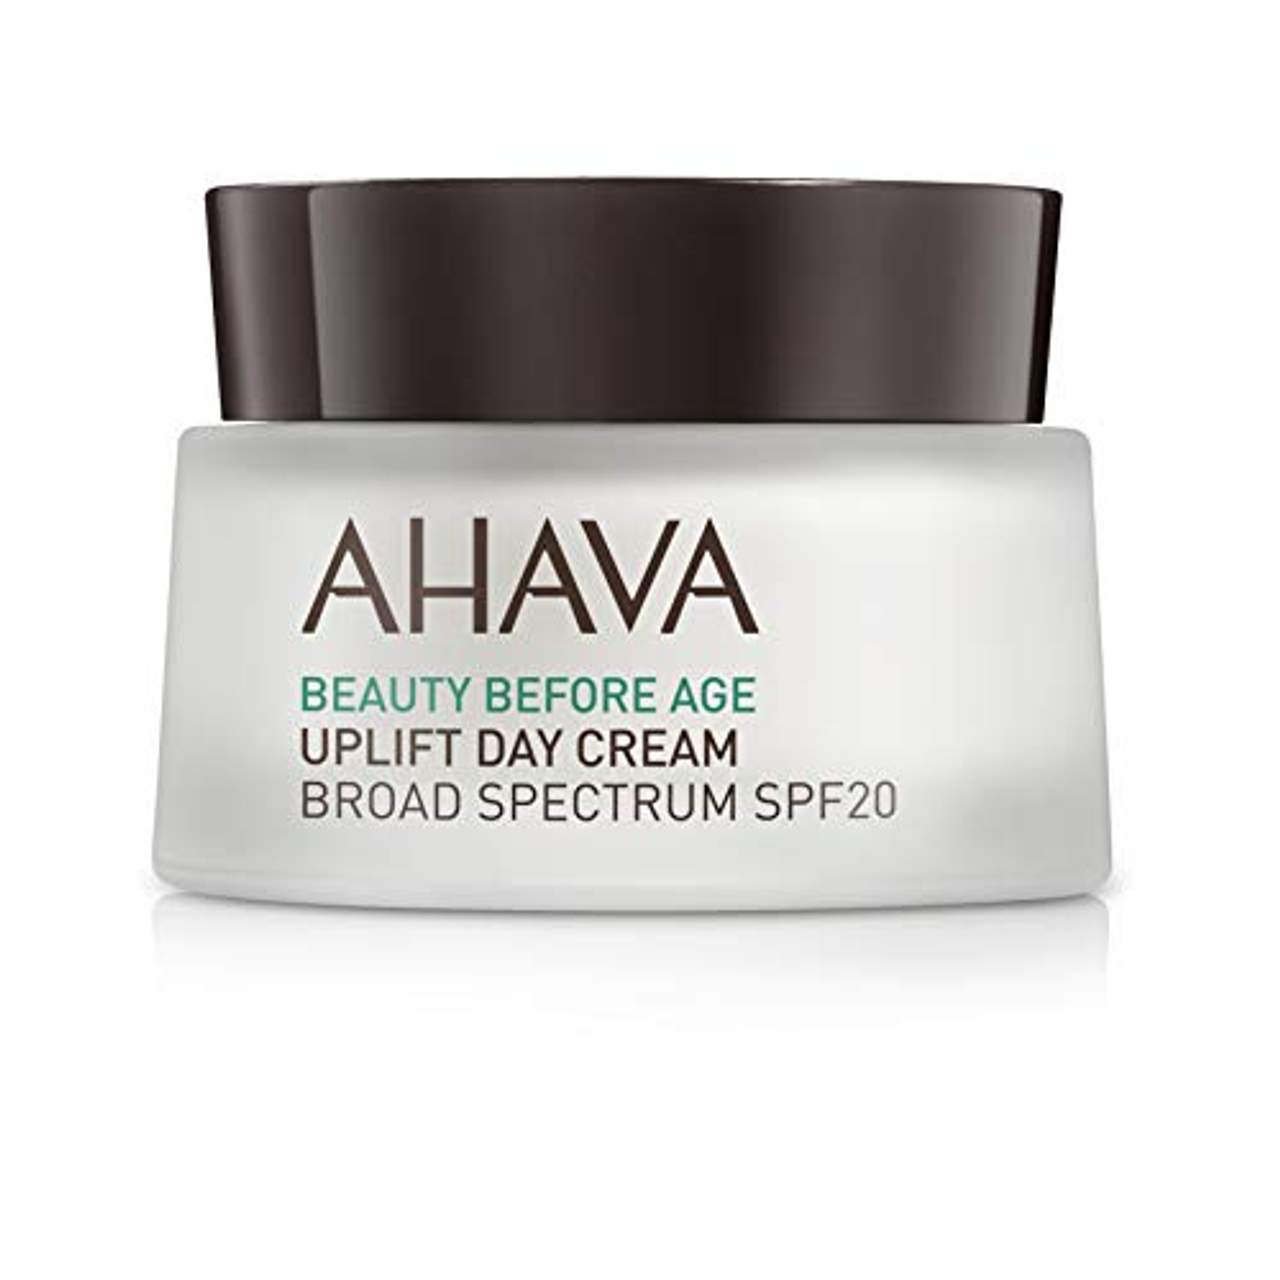 Ahava Beauty Before Age Uplift Day Cream